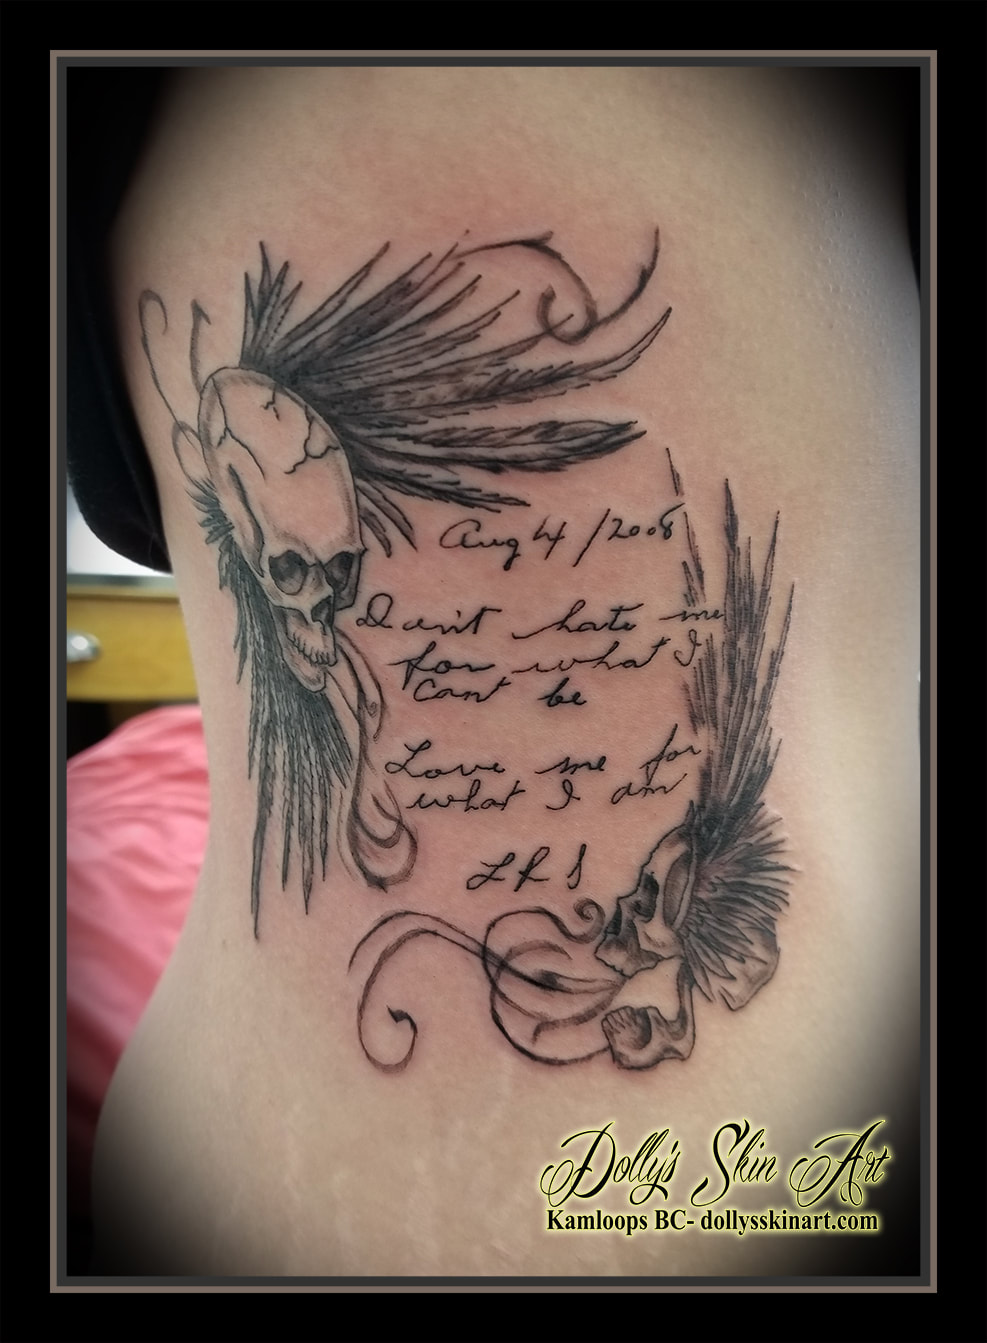 handwriting grandmother skulls feathers filigree ribs side black and grey tattoo kamloops tattoo dolly's skin art